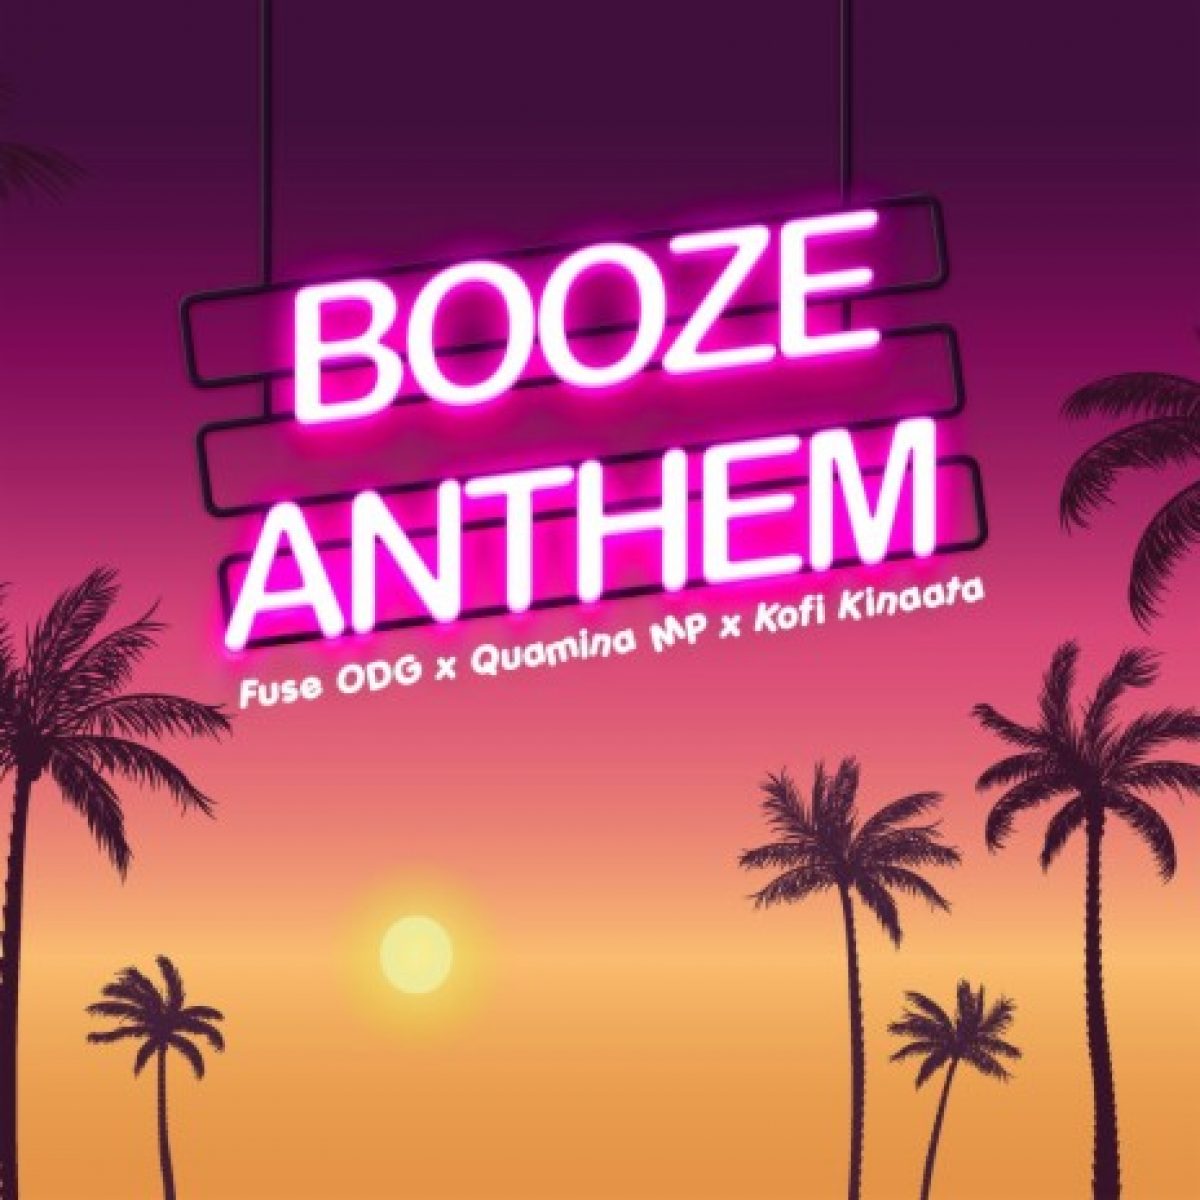 Fuse ODG – Booze Anthem Ft. Quamina MP, Kofi Kinaata mp3 download